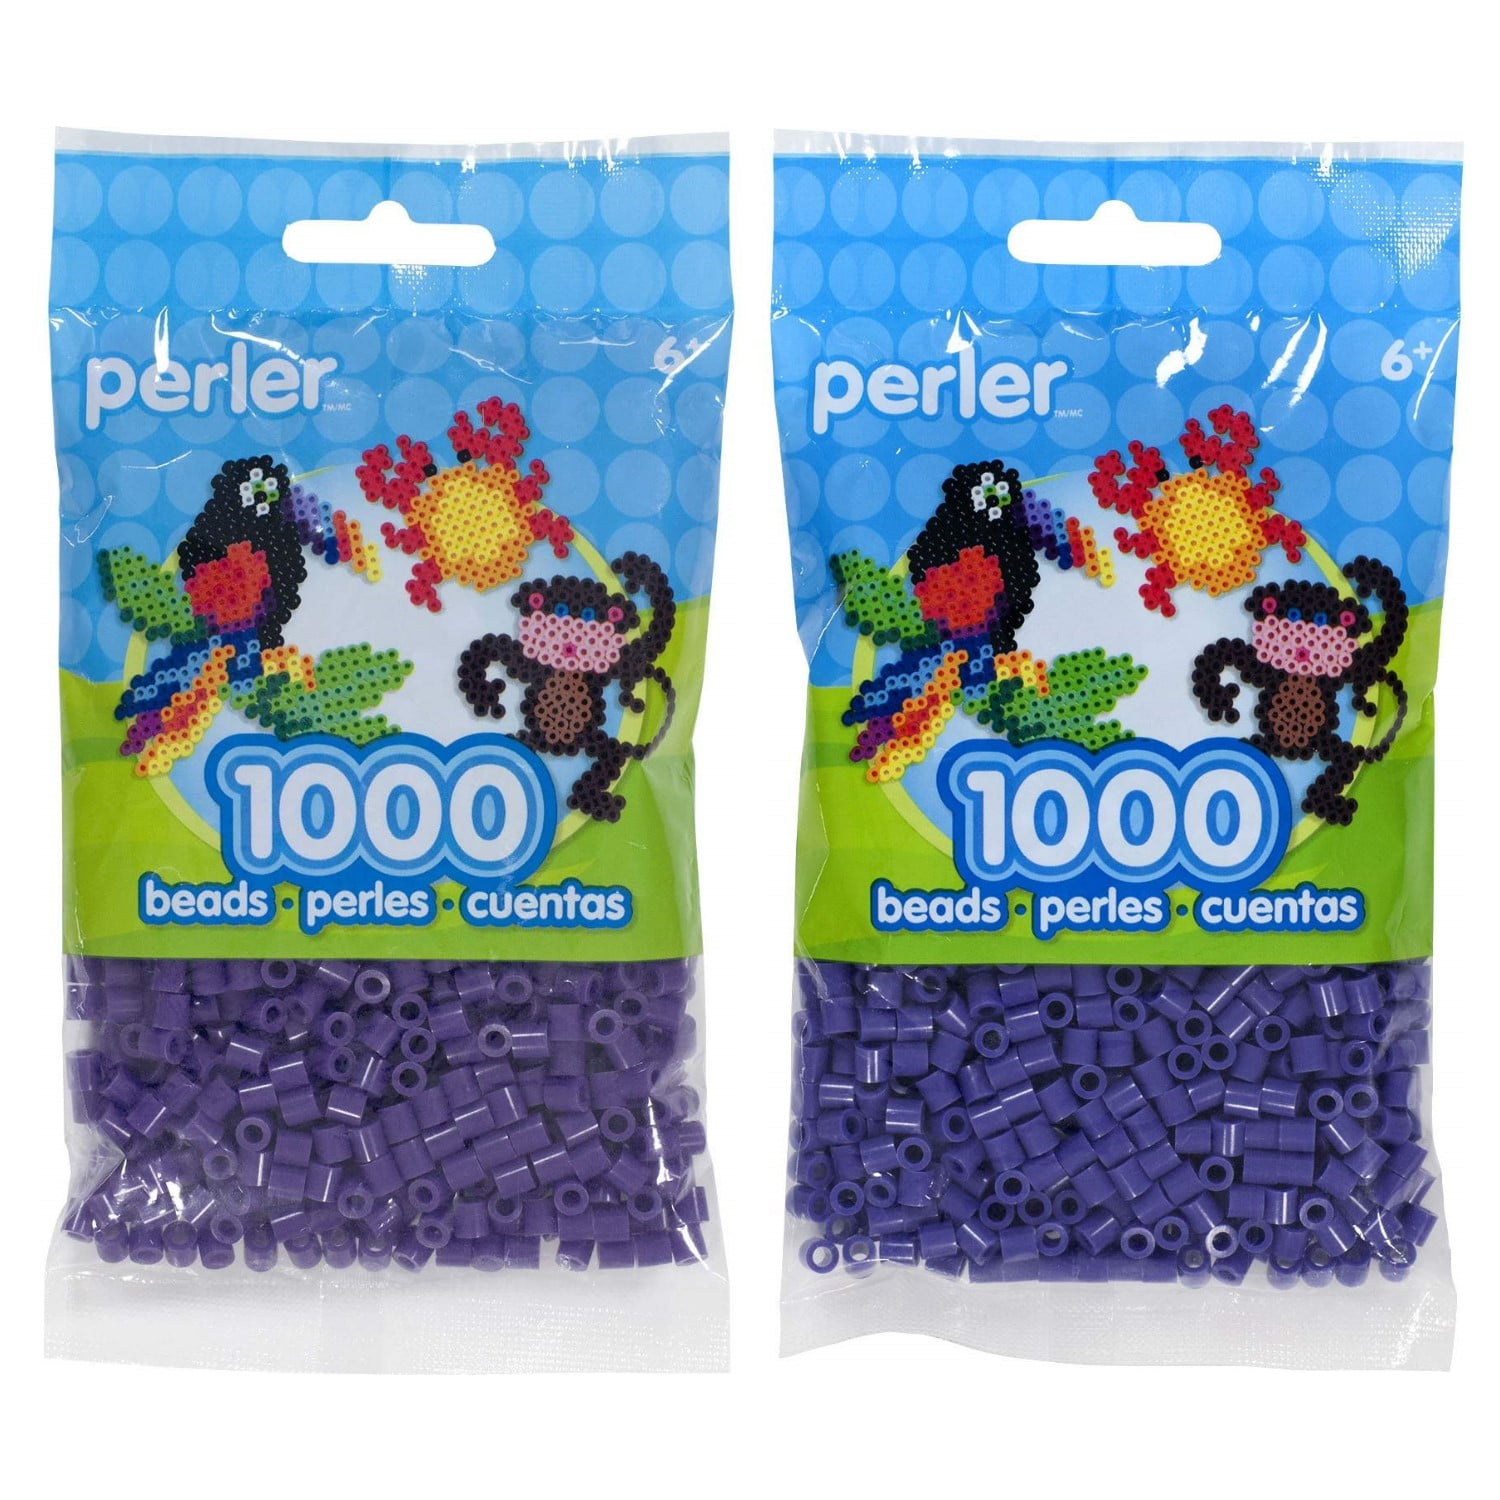 1000 pkgcreme Classic Crme Delivery Free Set 3 Perler Beads crème bag